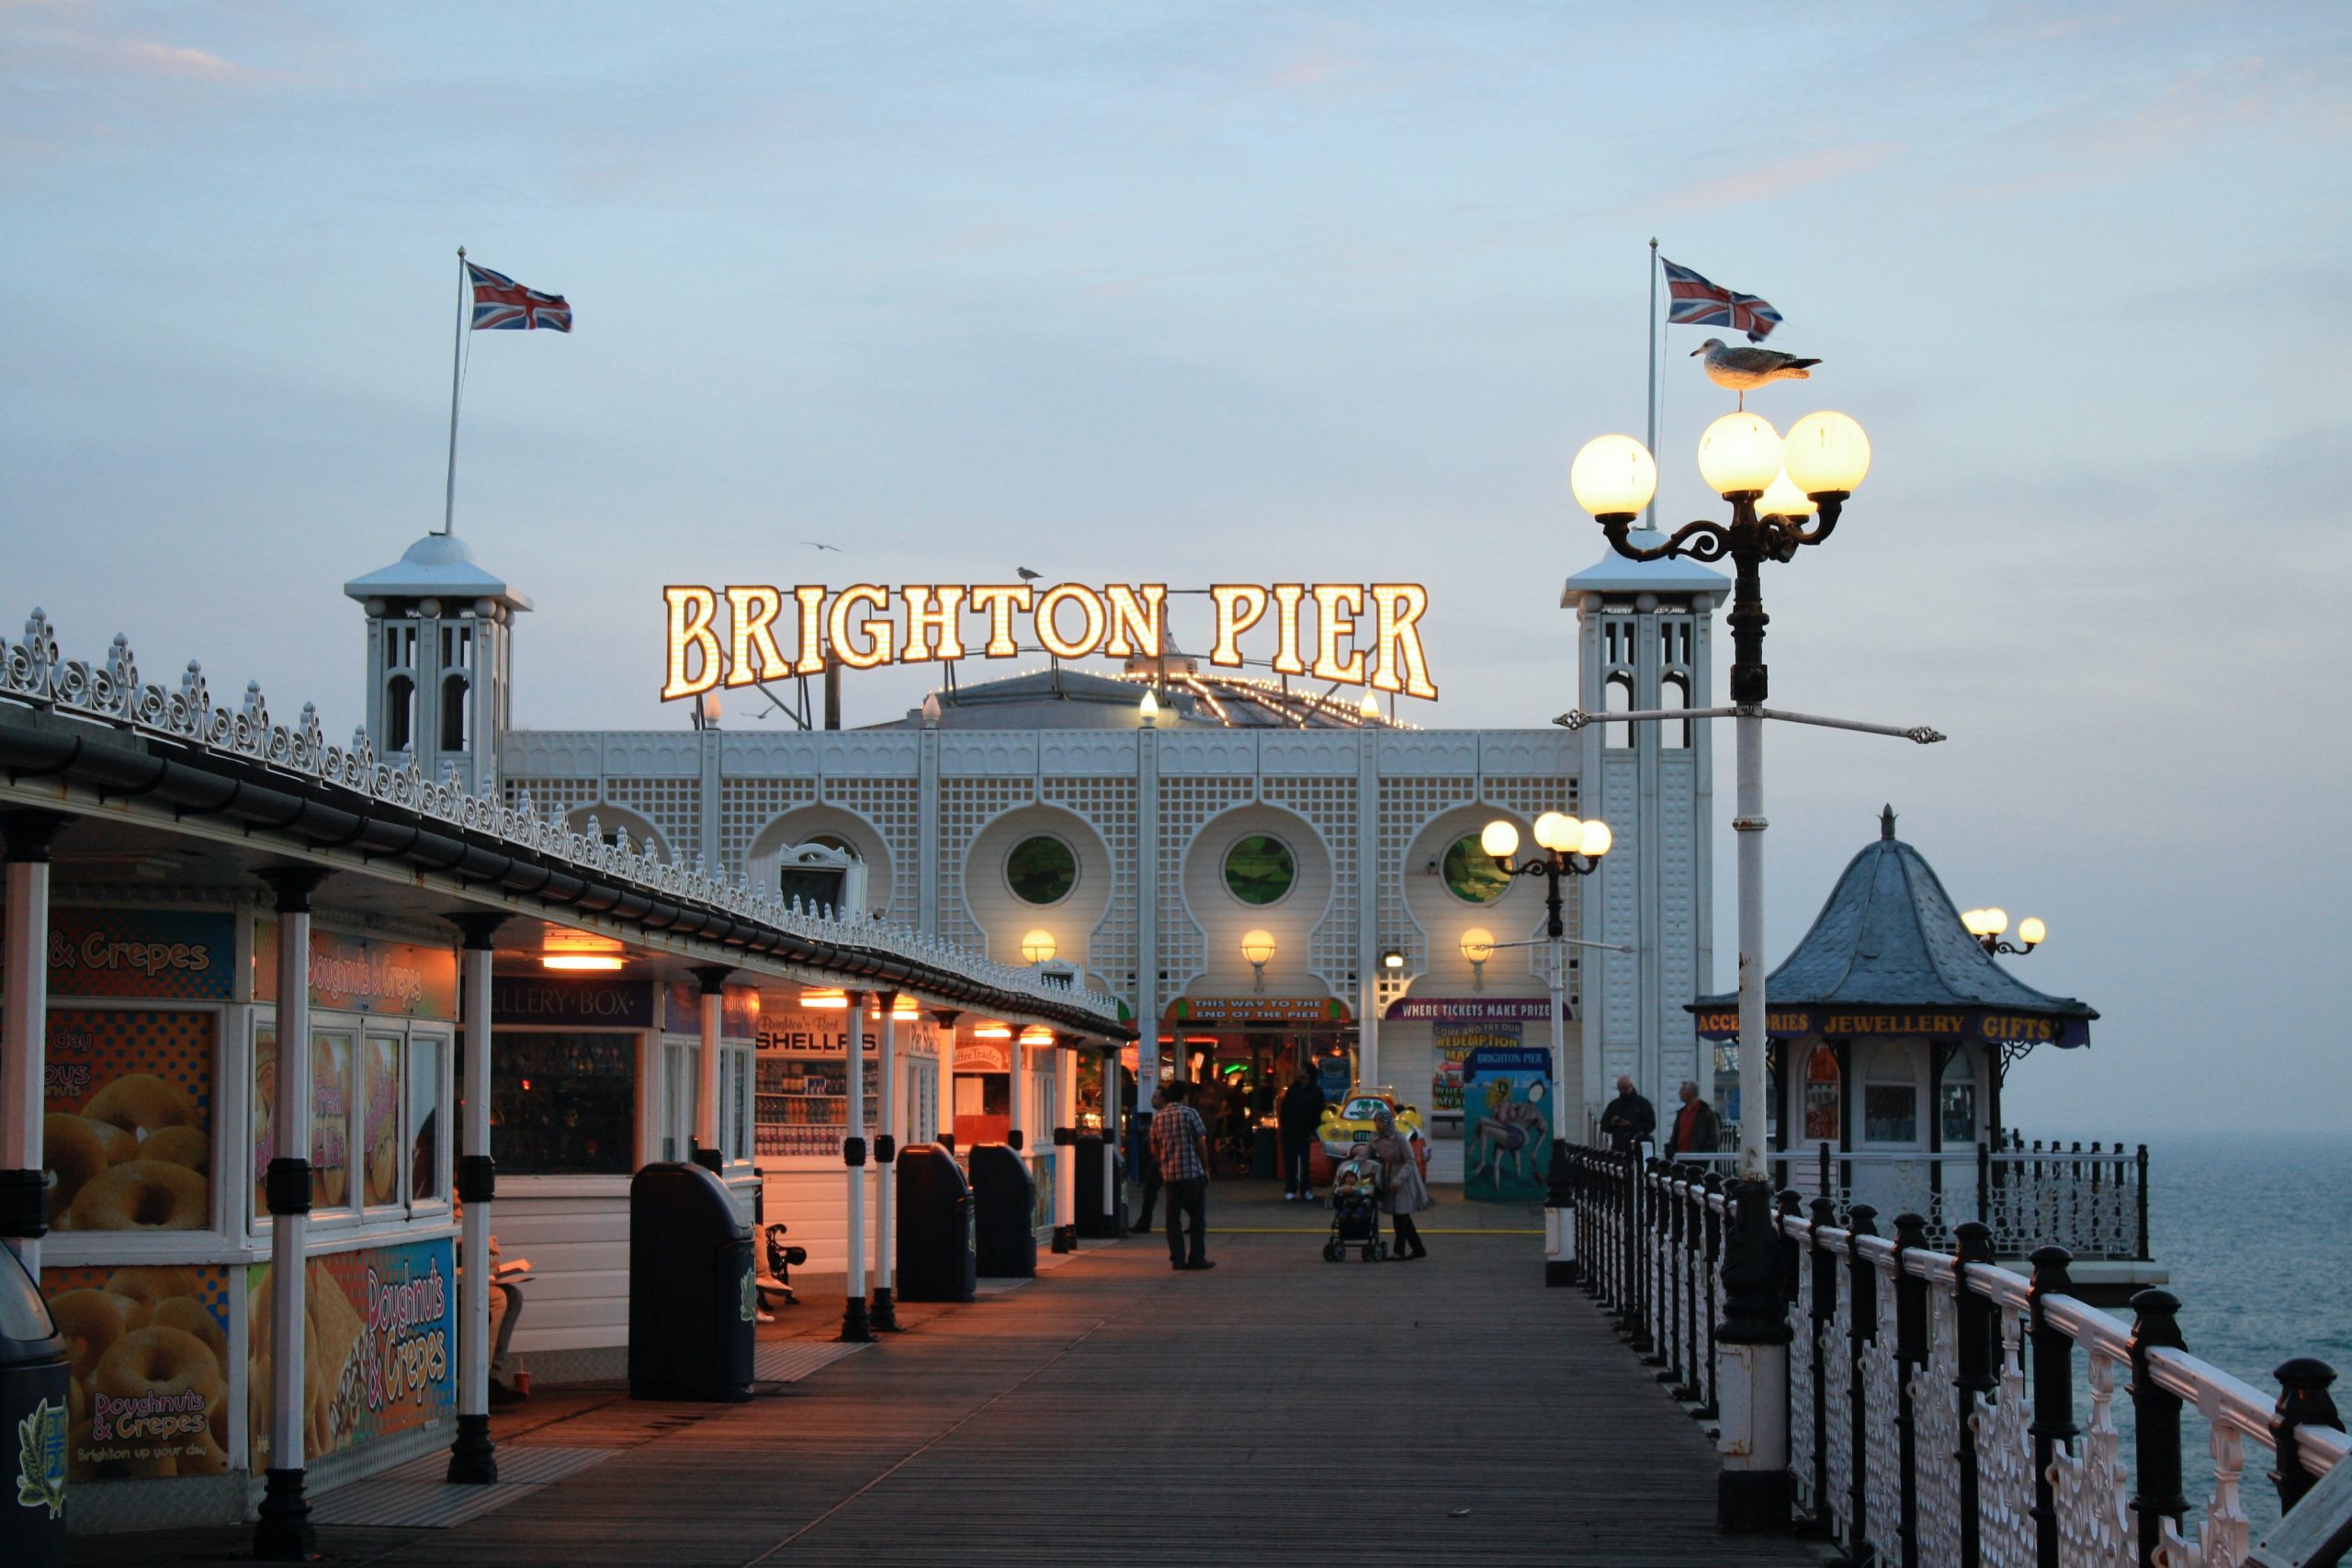 Brighton pier sign on promenade